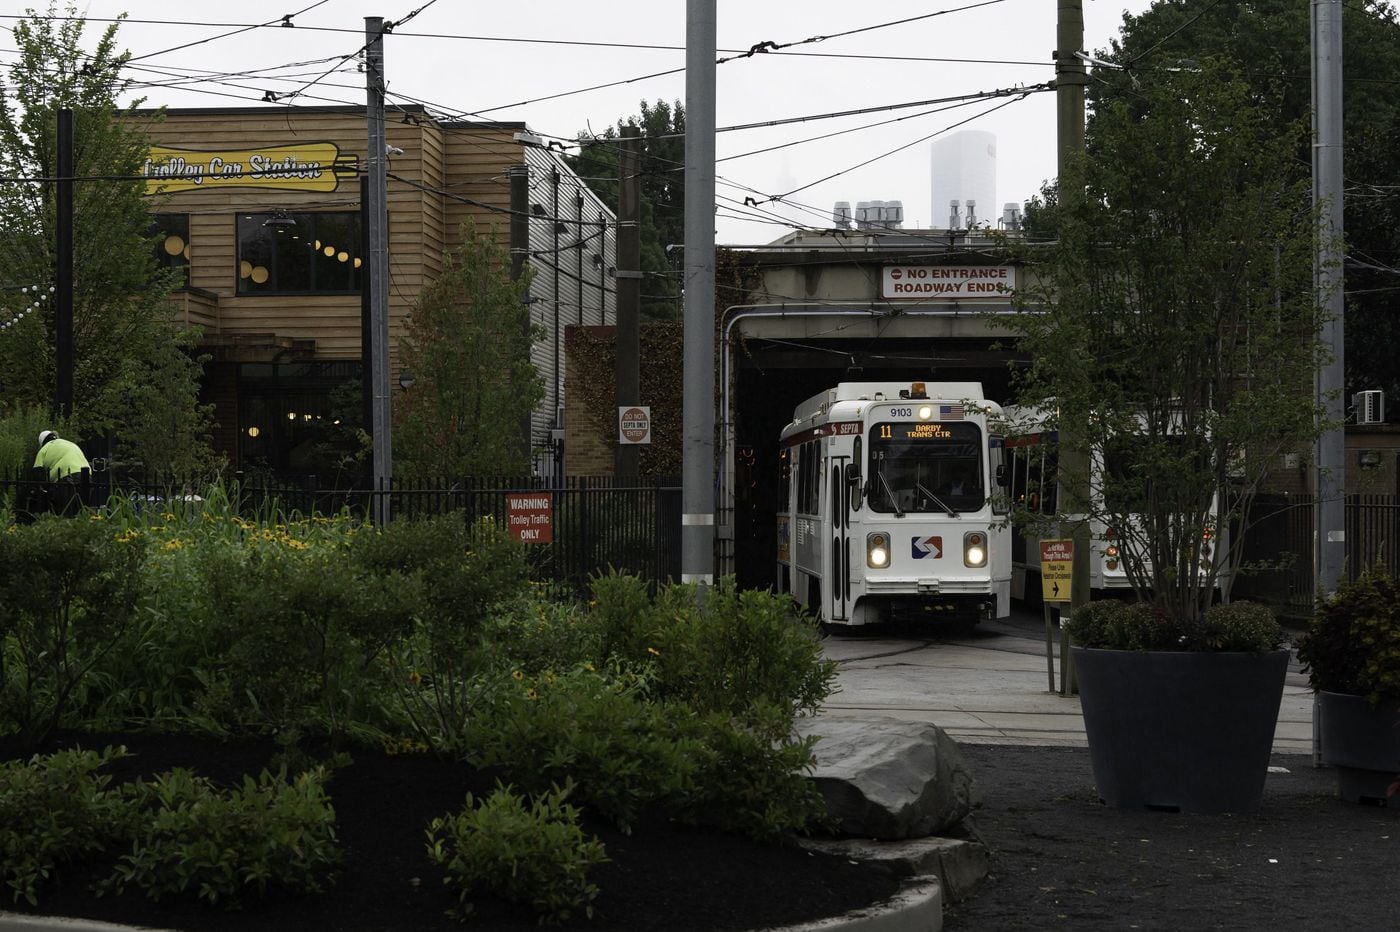 Trolleys in the garden: New landscape and cafe transform bleak West Philly junction | Inga Saffron